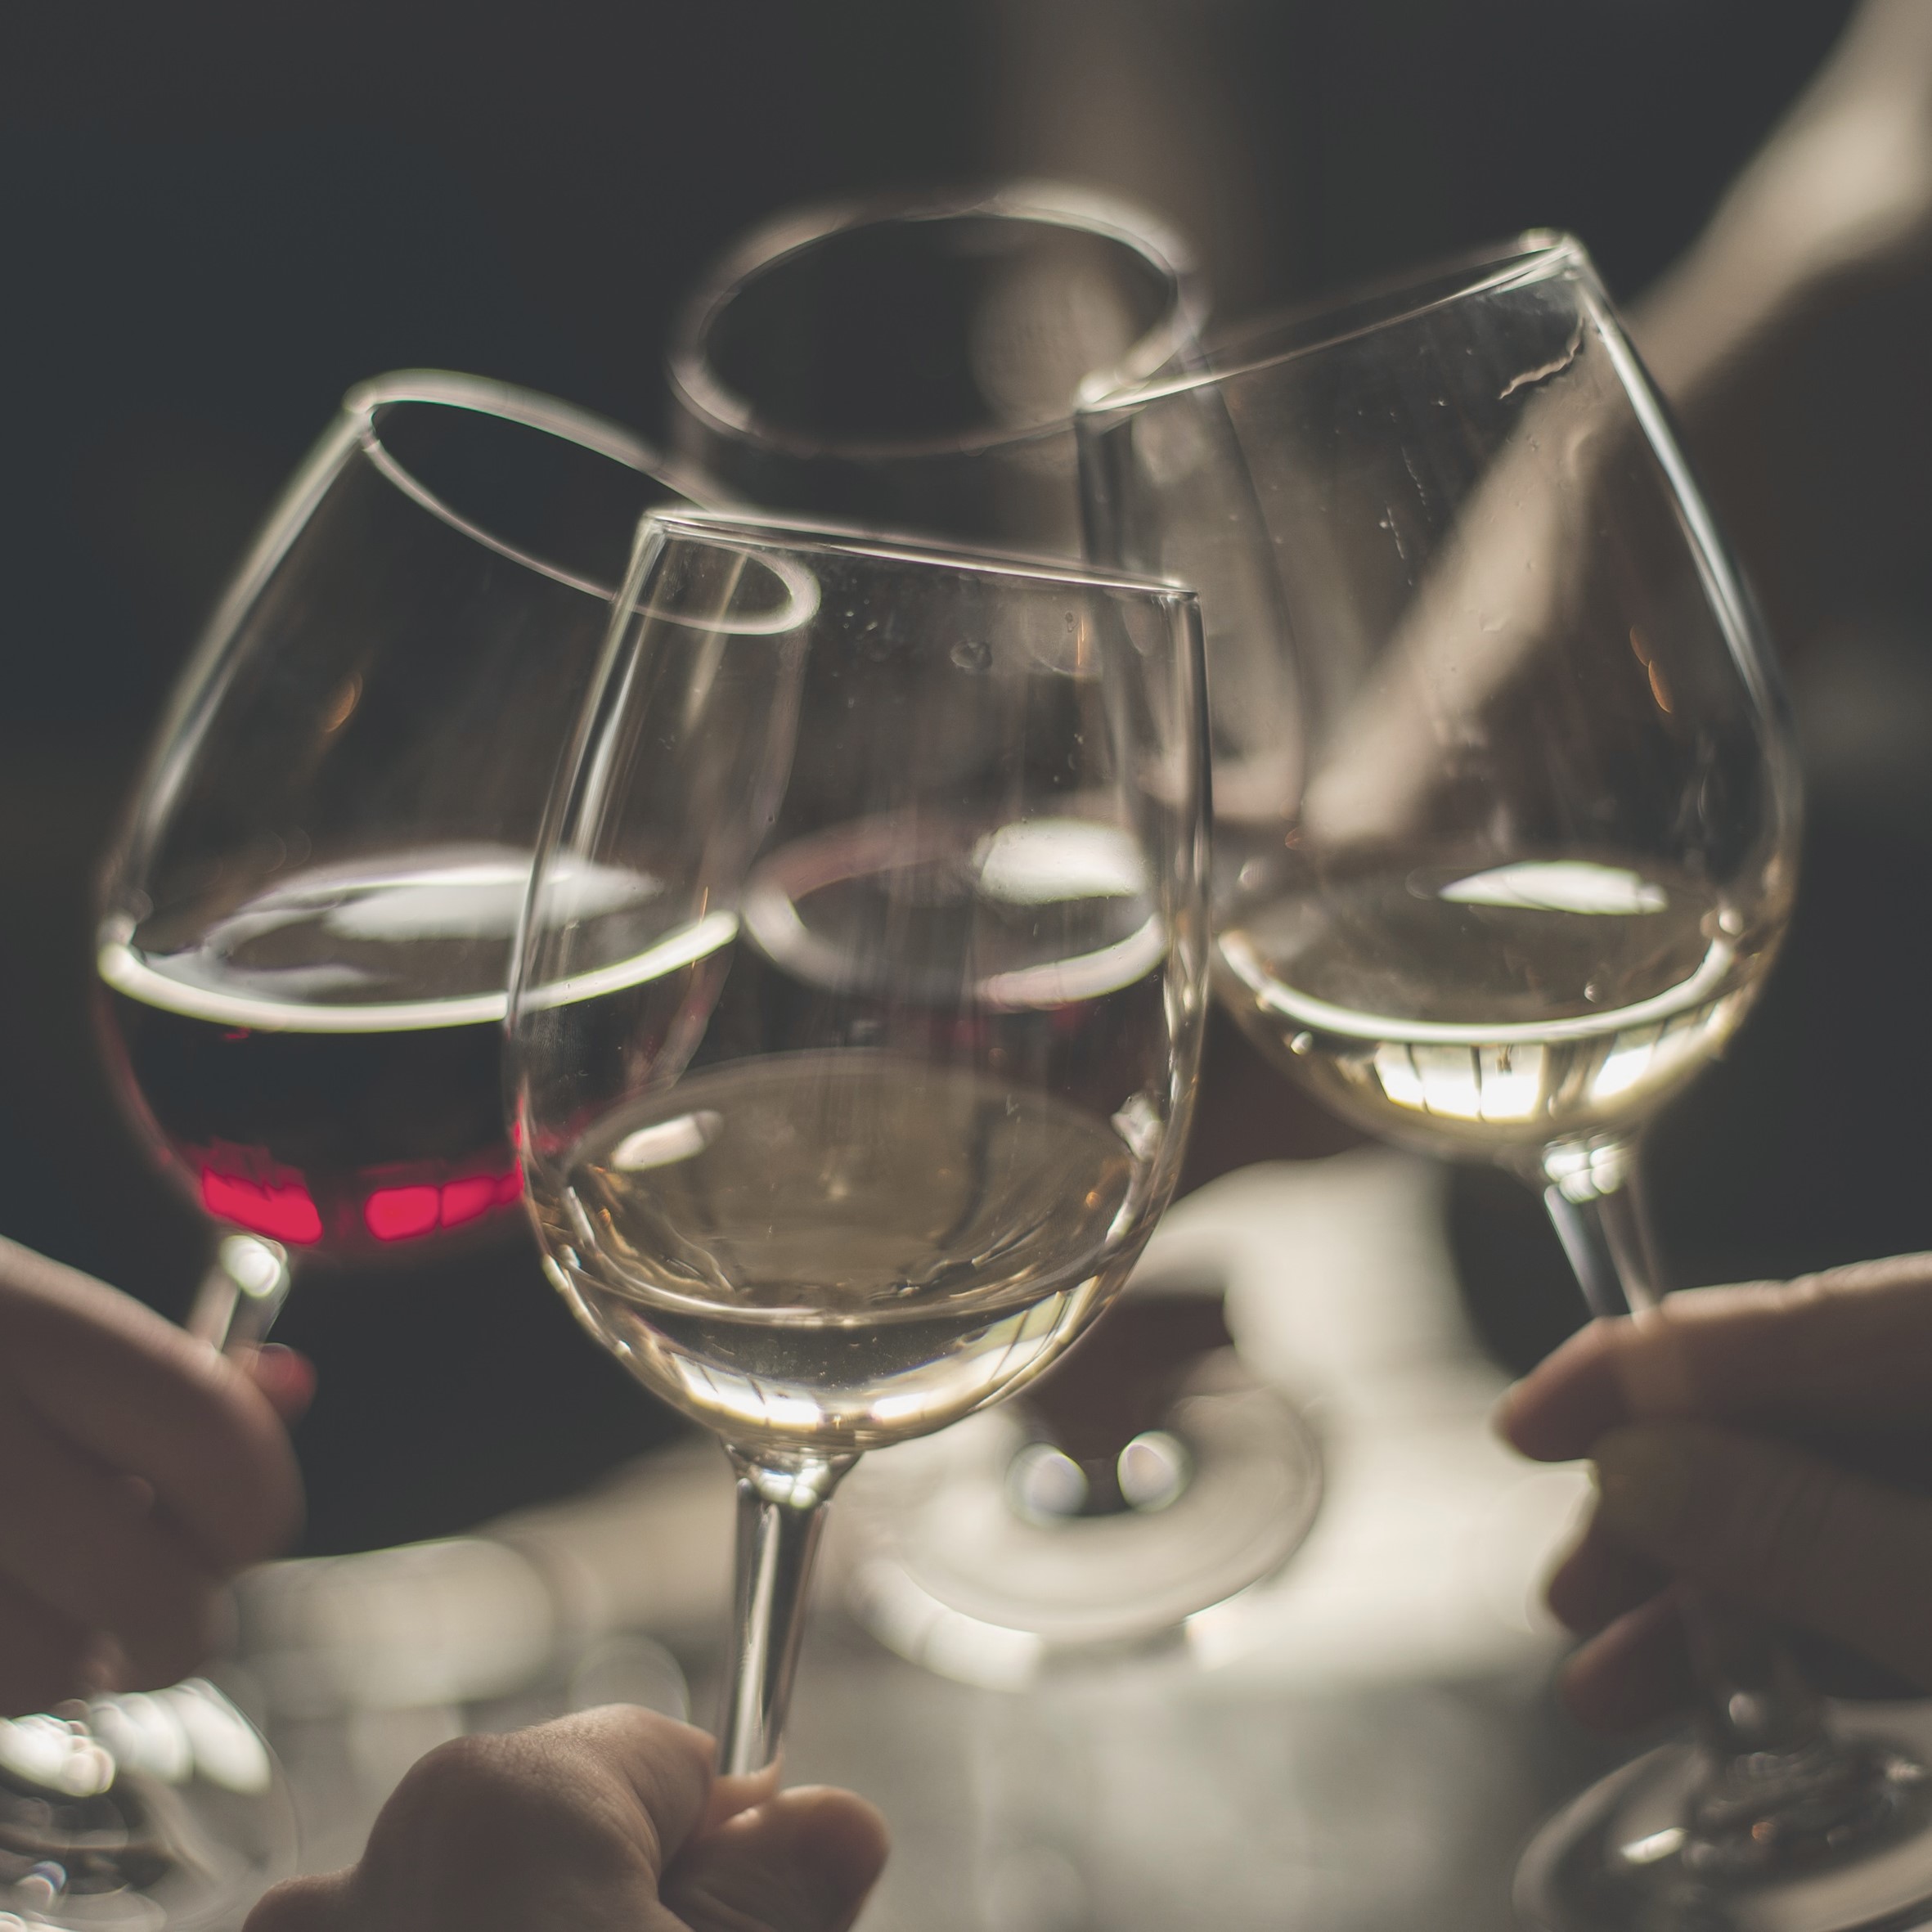 UK On trade - New behaviours driving wine market opportunities in the UK